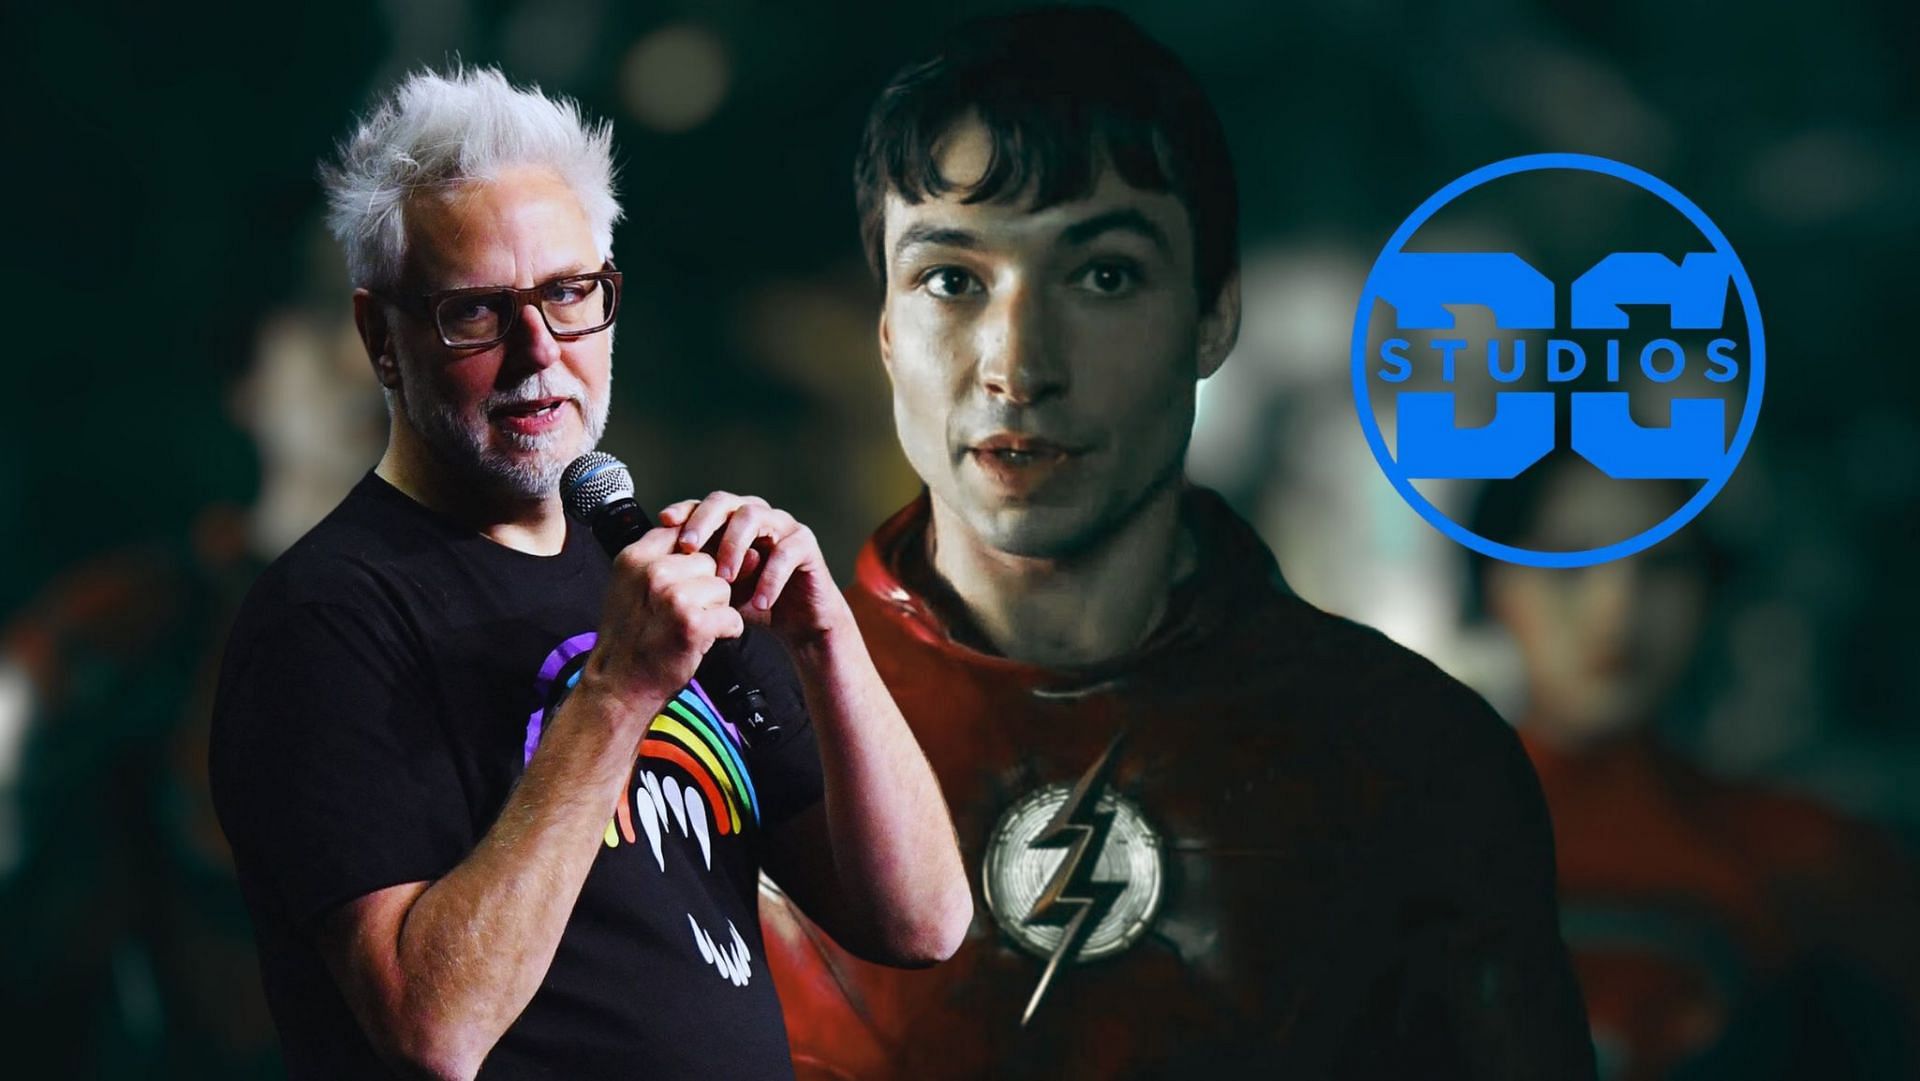 DC Studios co-CEO James Gunn speaks out on The Flash star Ezra Miller